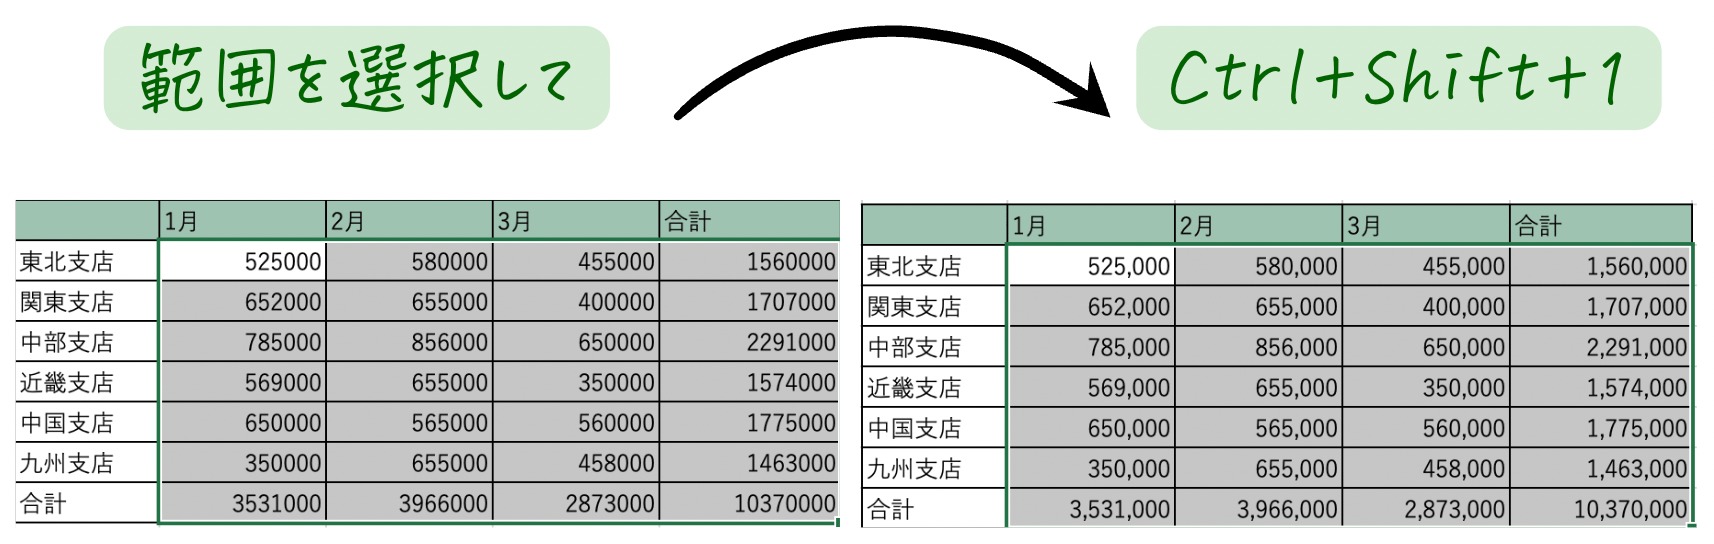 【Excel】時短ショートカットキー５選